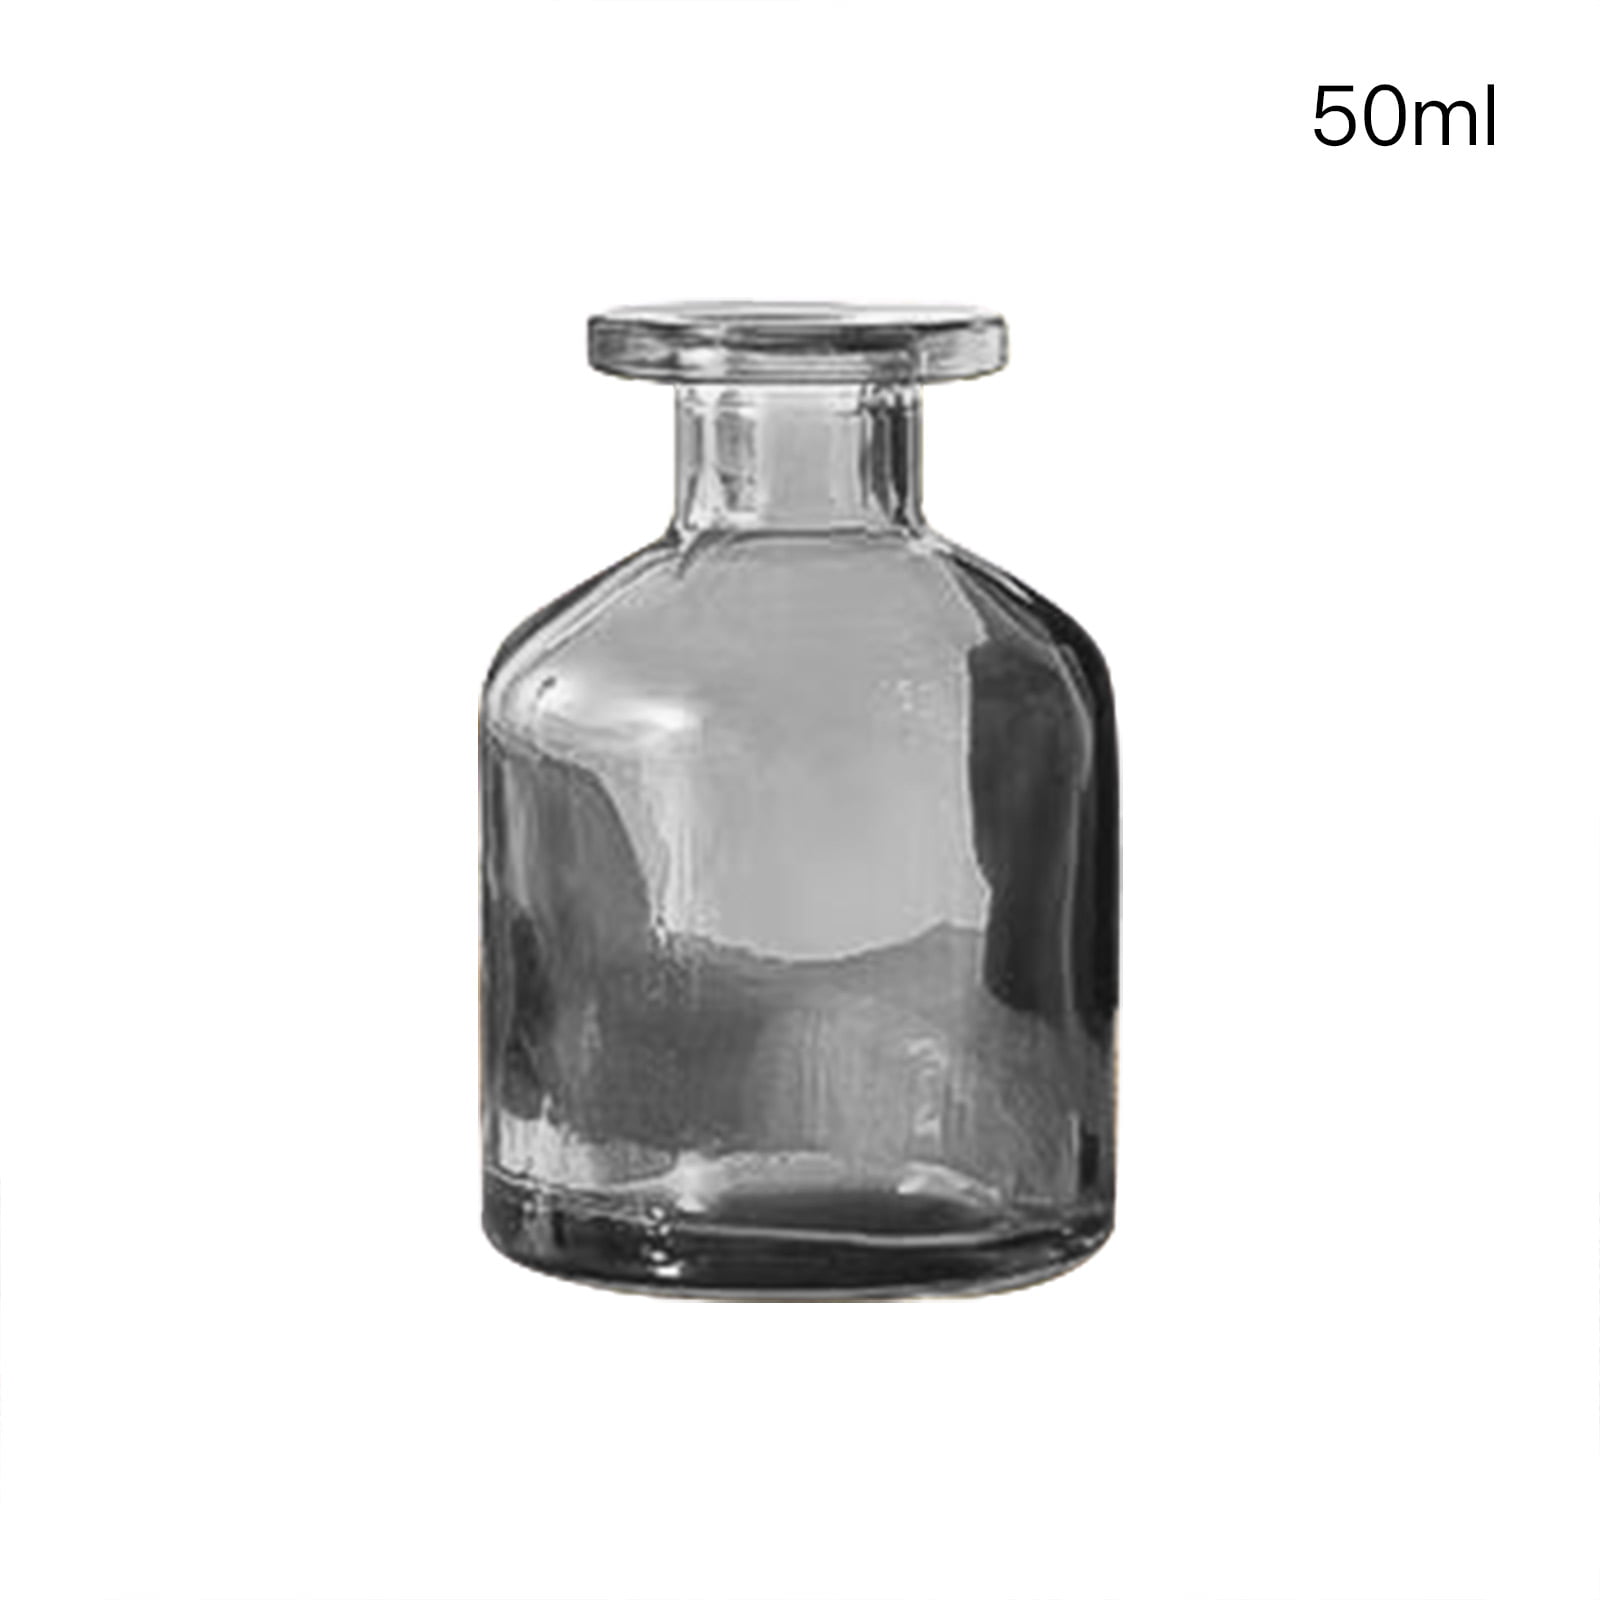 Cornucopia Round Glass Spherical Bottles “Potion Bottles” with Corks DIY Crafts & Decorative Bottles Bath Salts 2-Pack, 8-Ounce Capacity ; Large Bottles for Costume Props